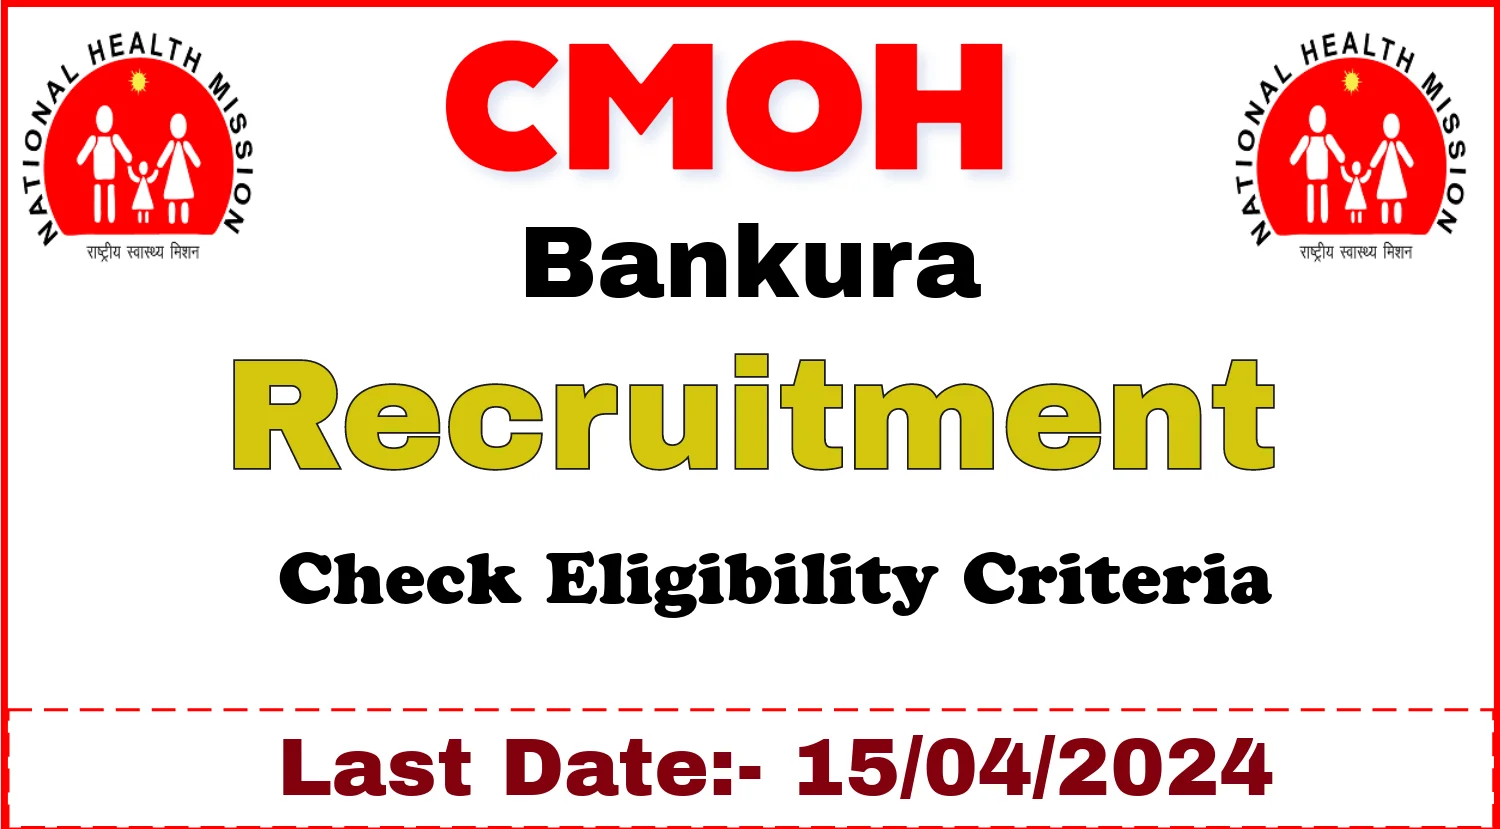 CMOH Bankura Recruitment 2024, Check Details Now